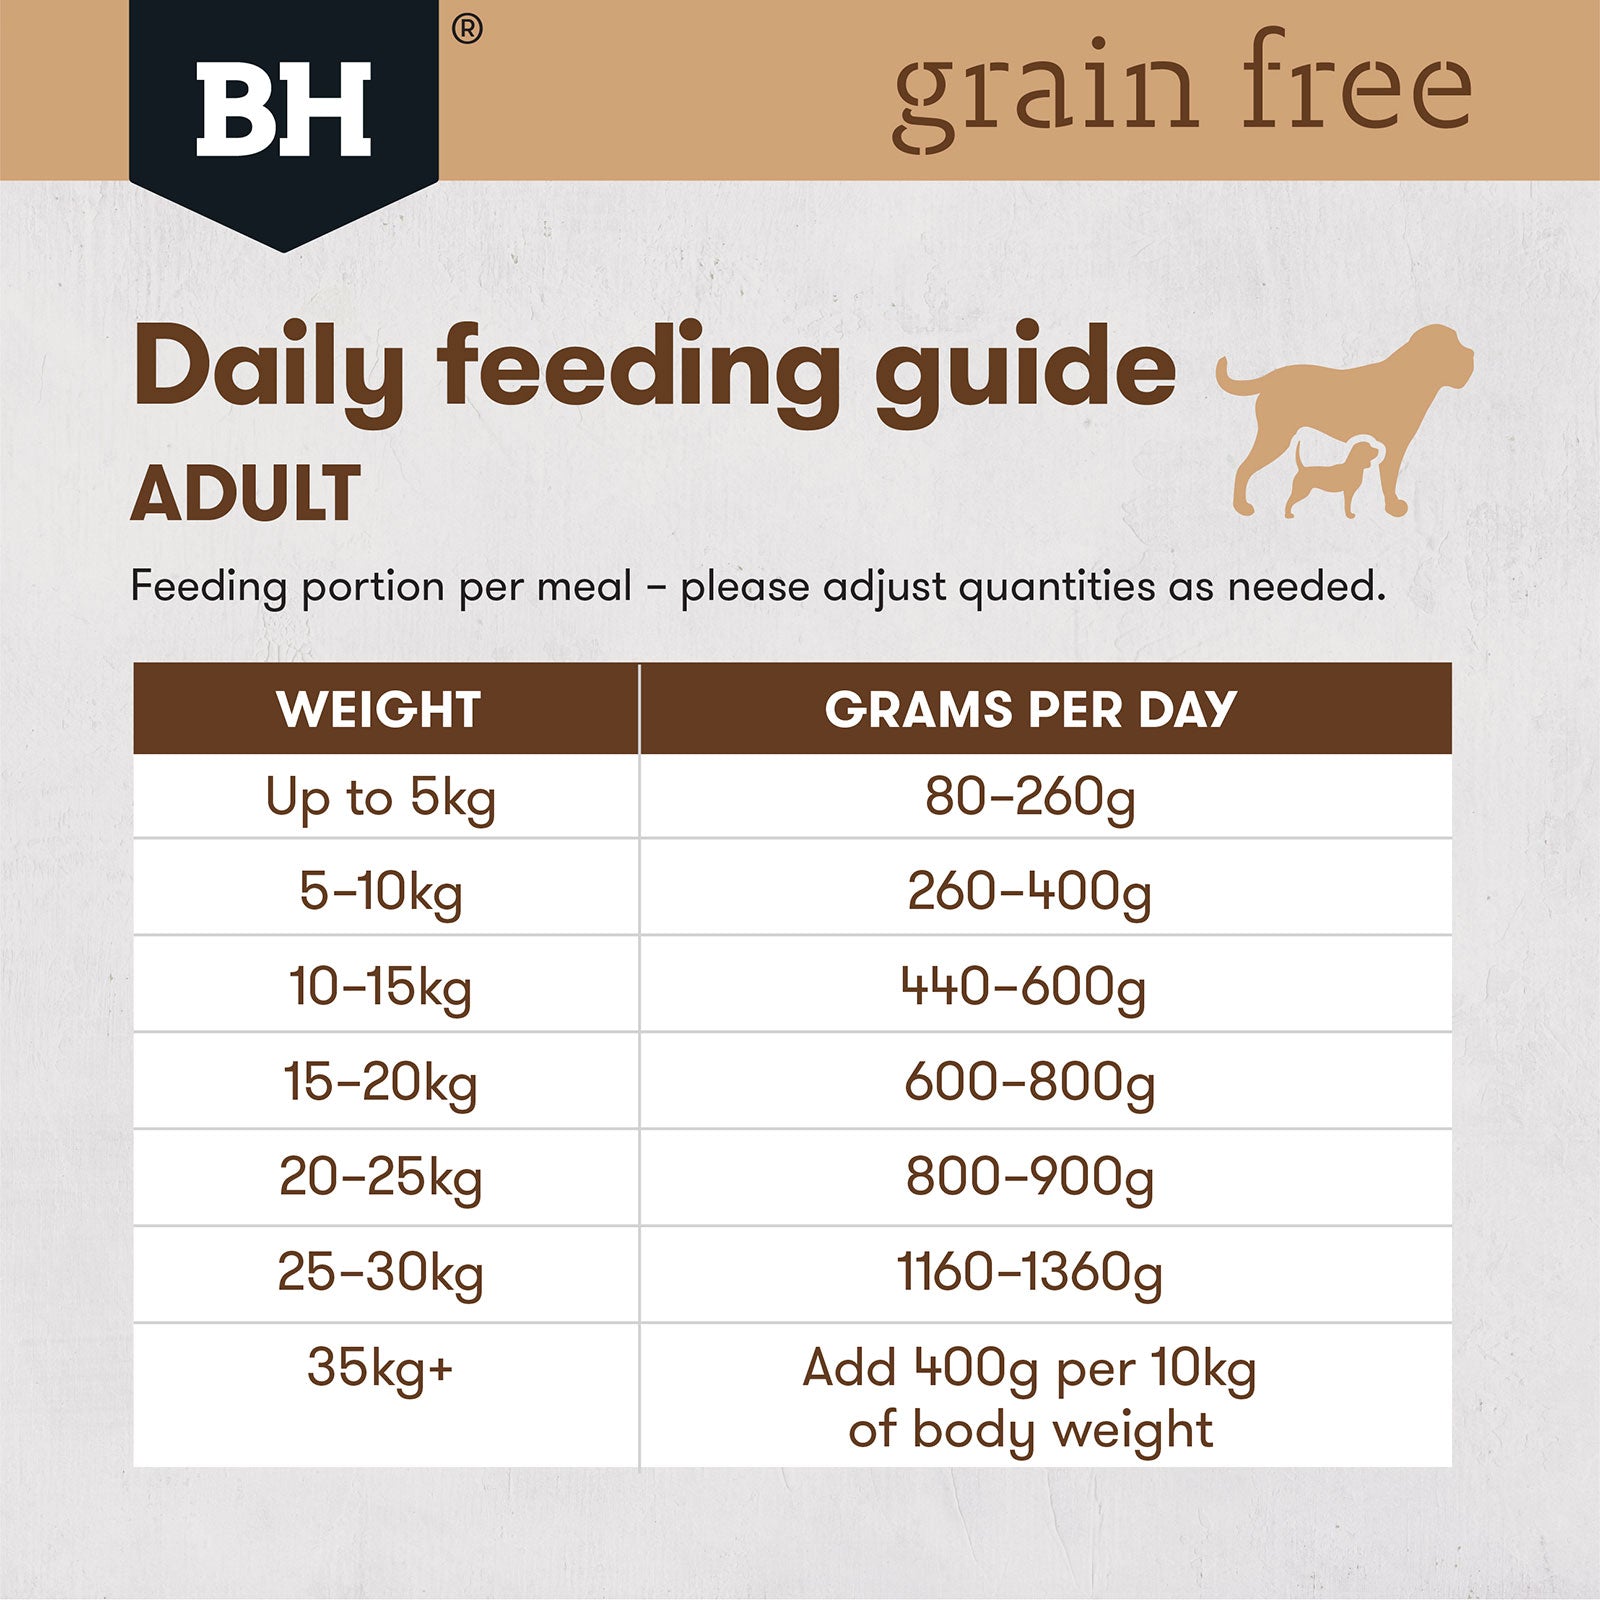 Black Hawk Grain Free Dog Food Tray Lamb